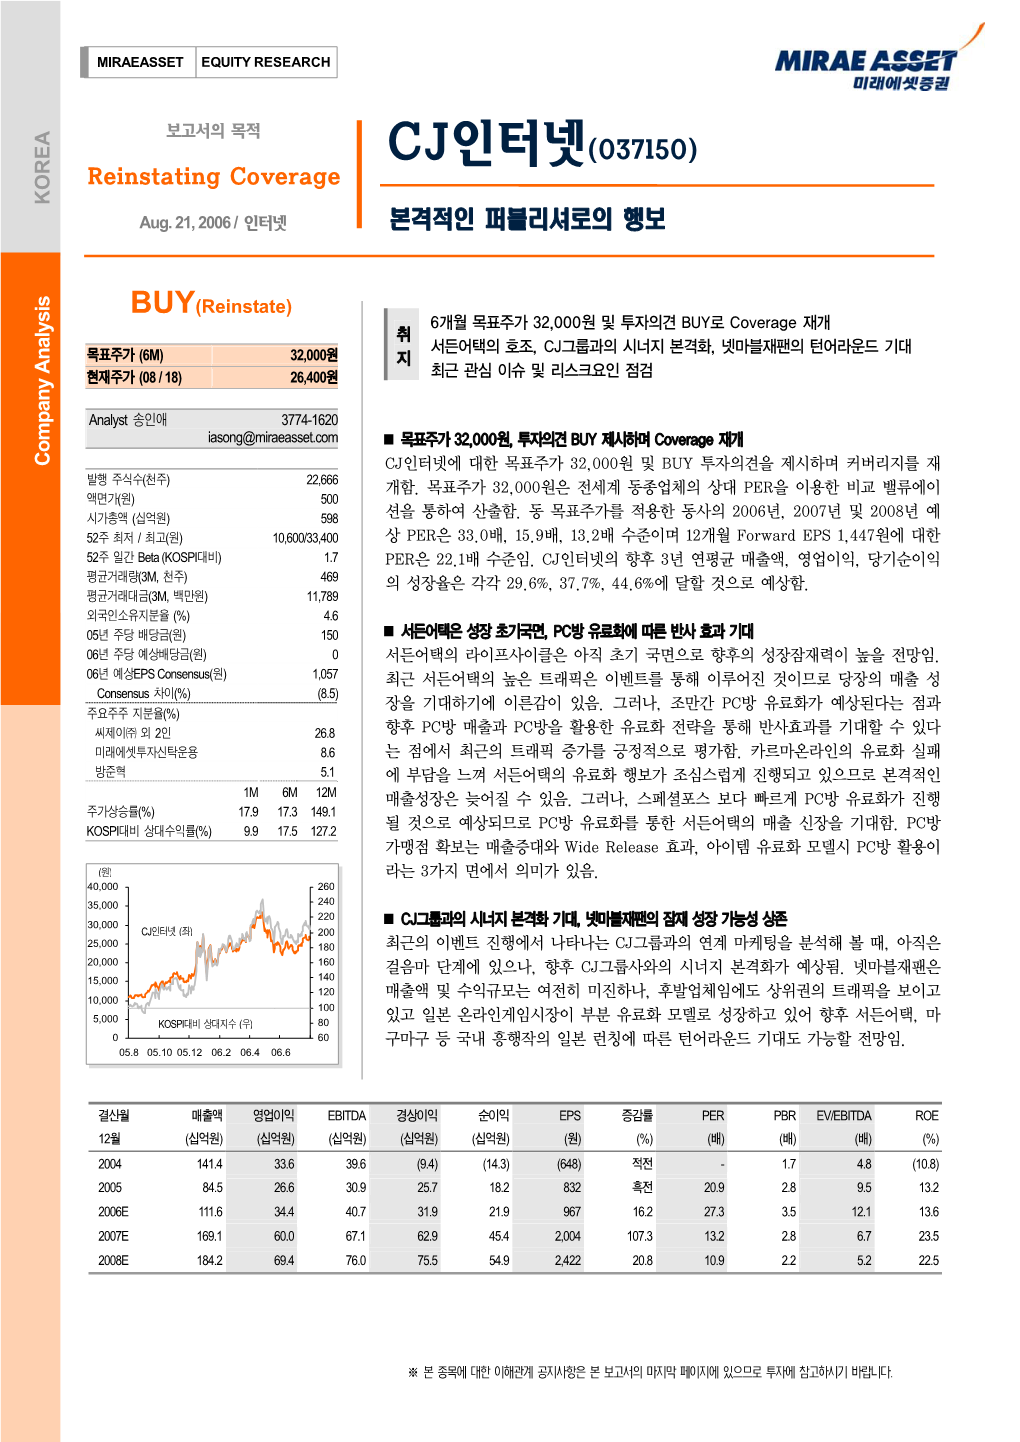 CJ인터넷(037150) Reinstating Coverage KOREA Aug